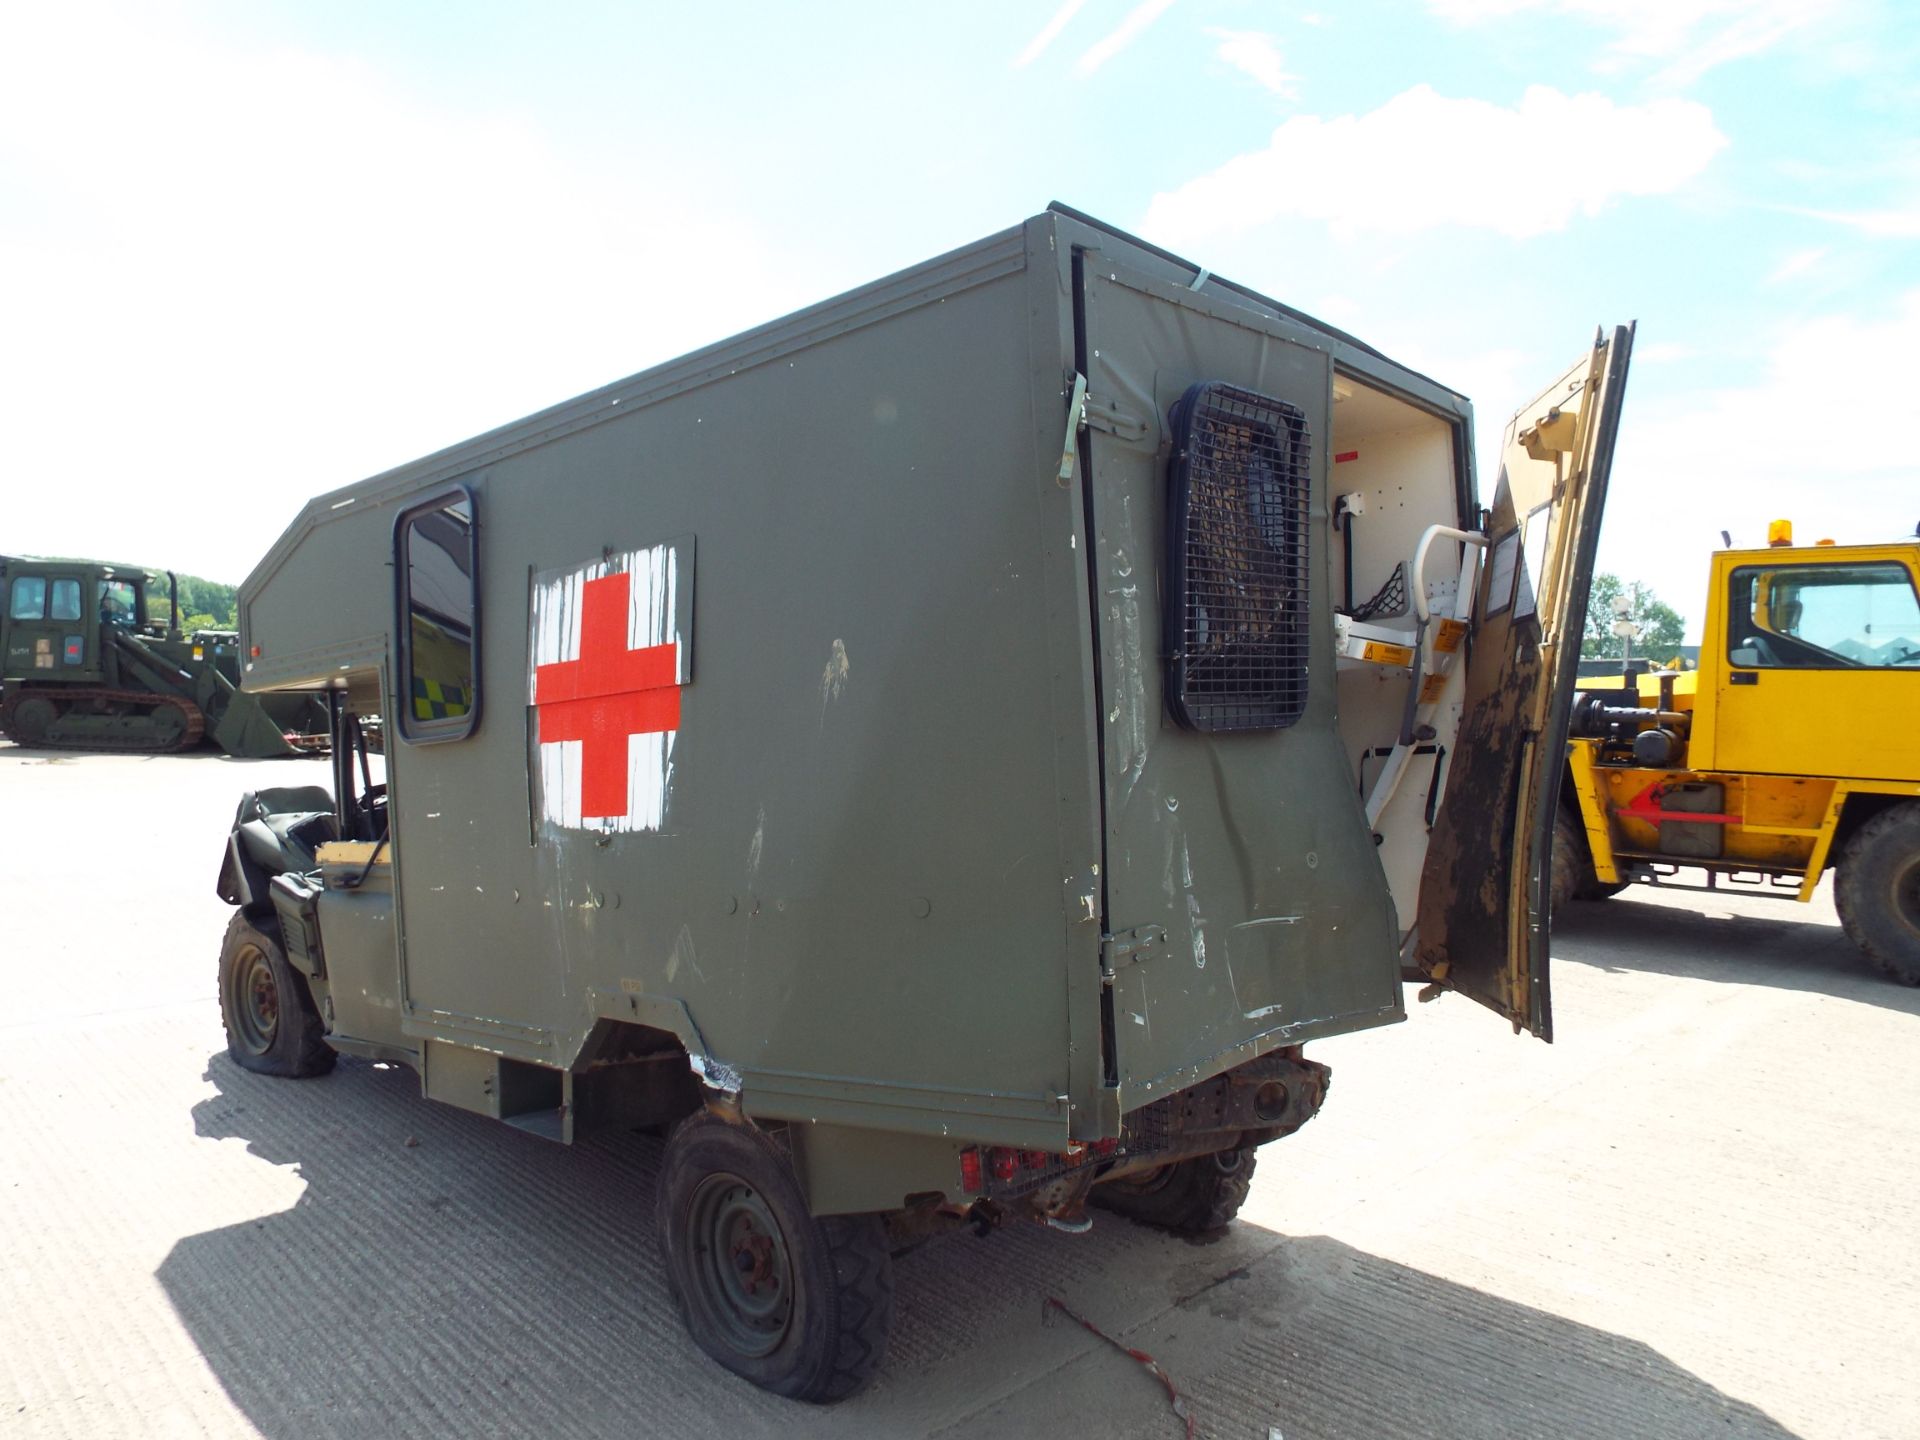 Military Specification Land Rover Wolf 130 Ambulance - Bild 5 aus 20